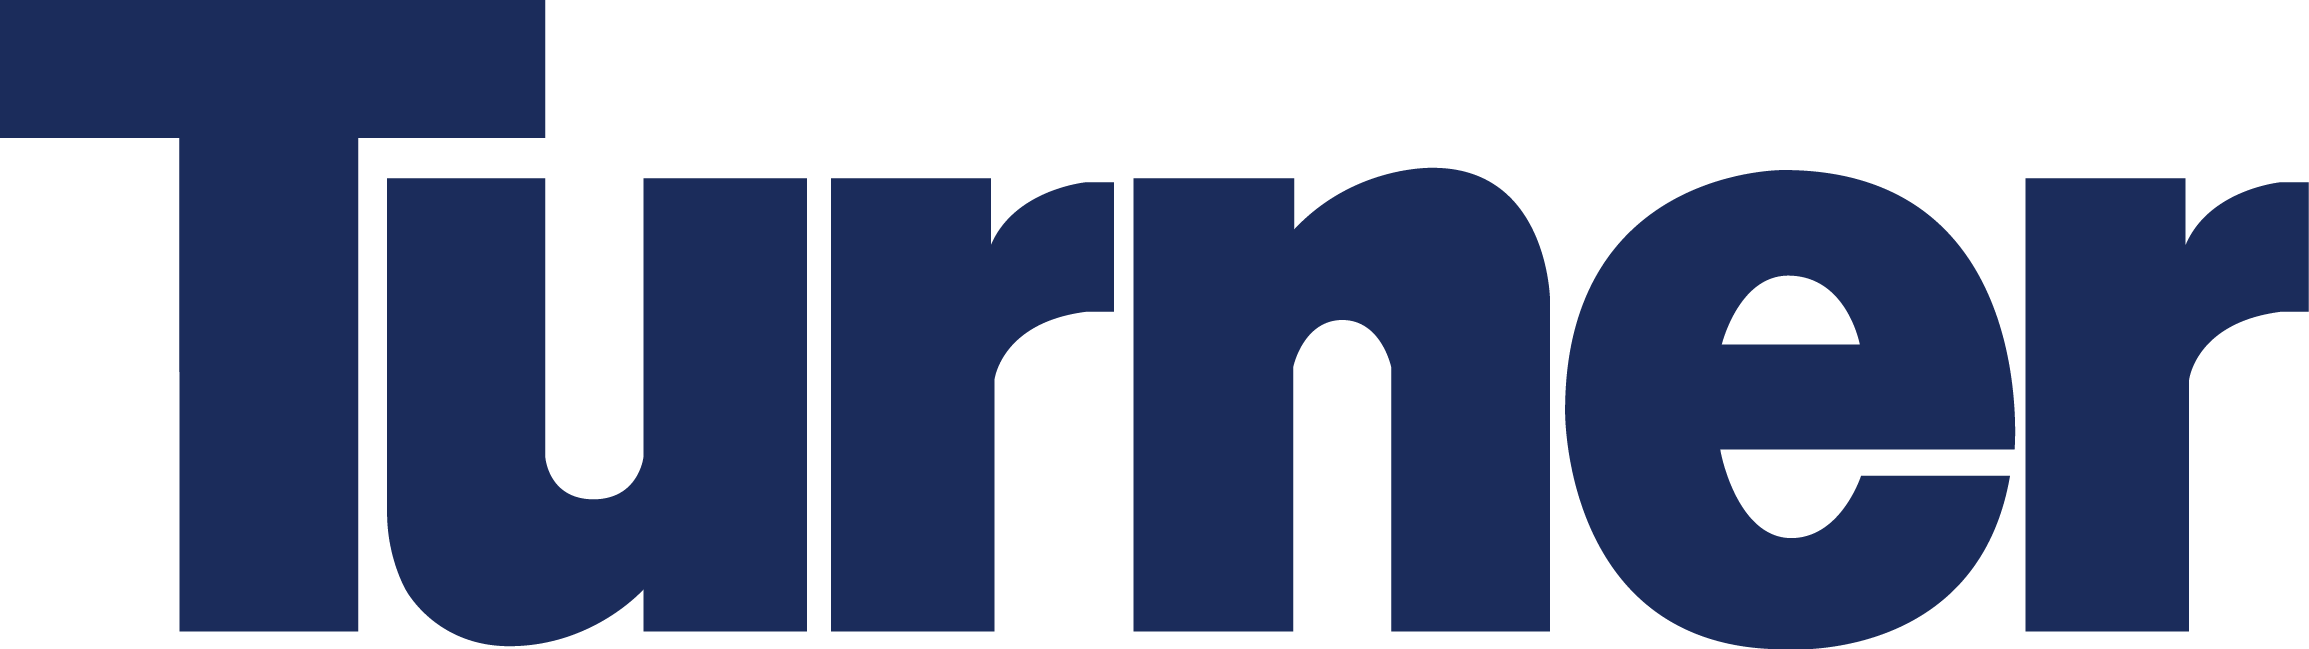 Turner Construction Co logo